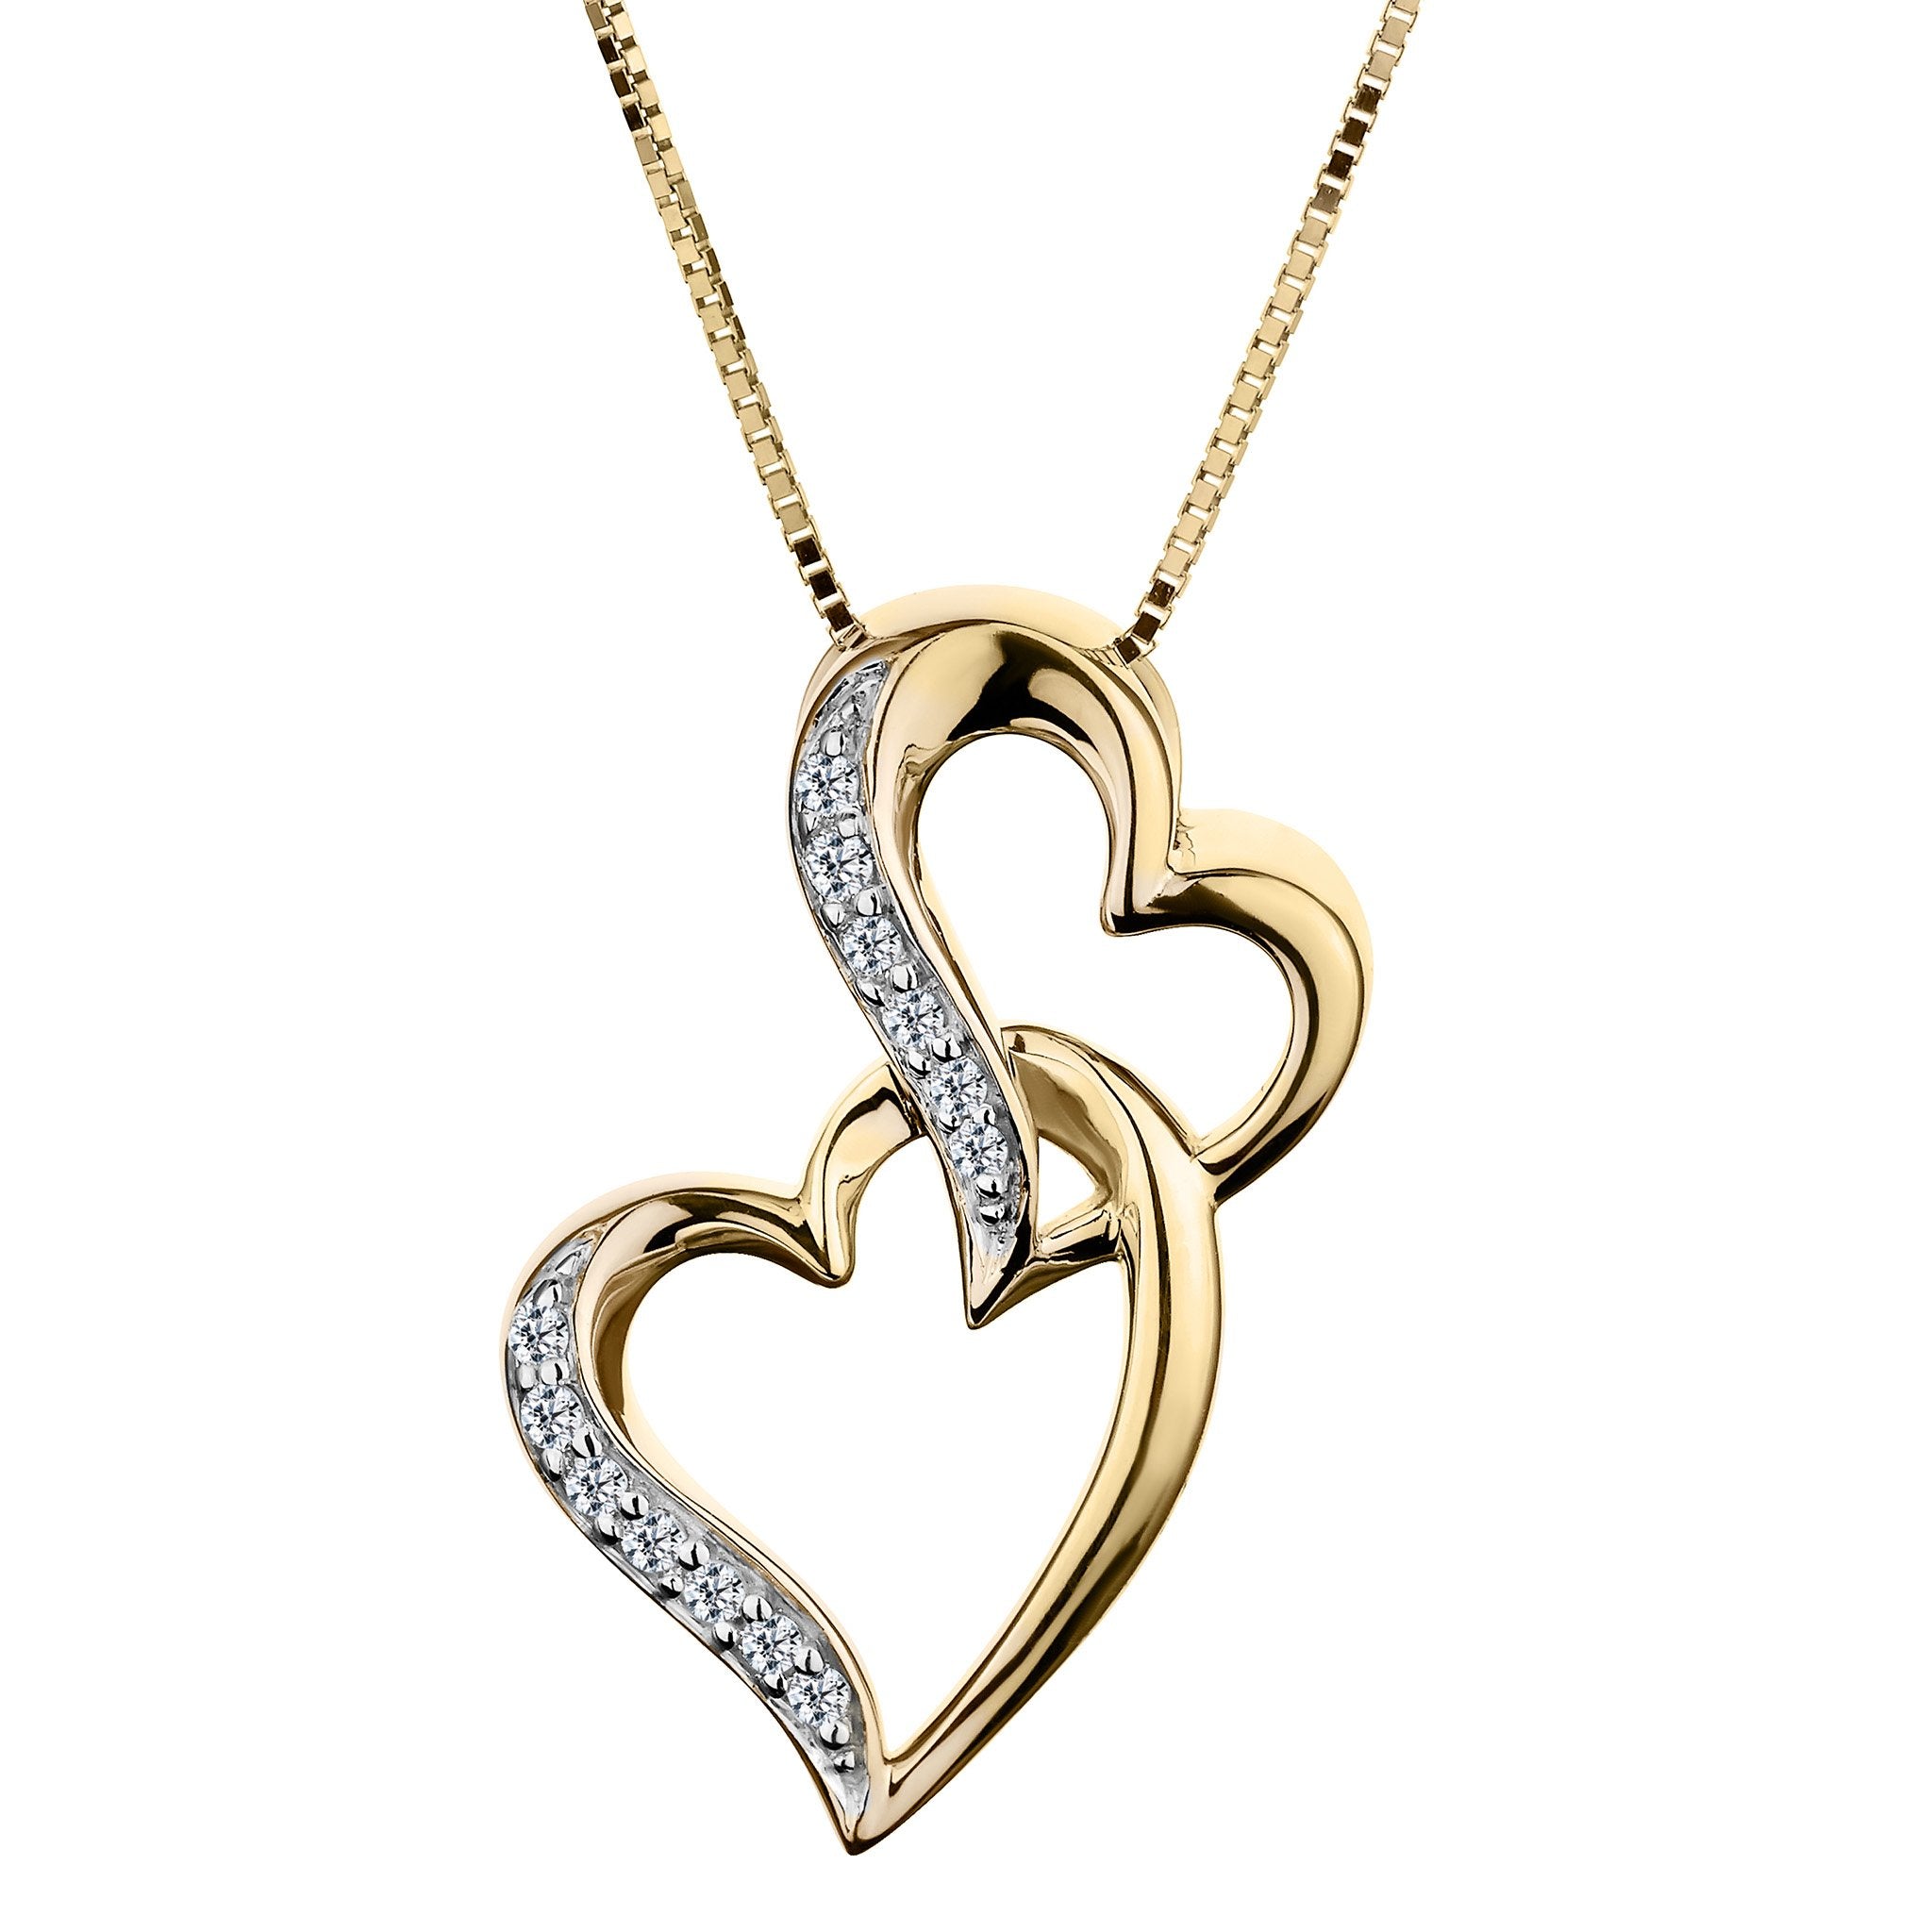 .06 Carat of Diamonds "Interlocking Love" Heart Pendant, 10kt Yellow Gold.....................NOW